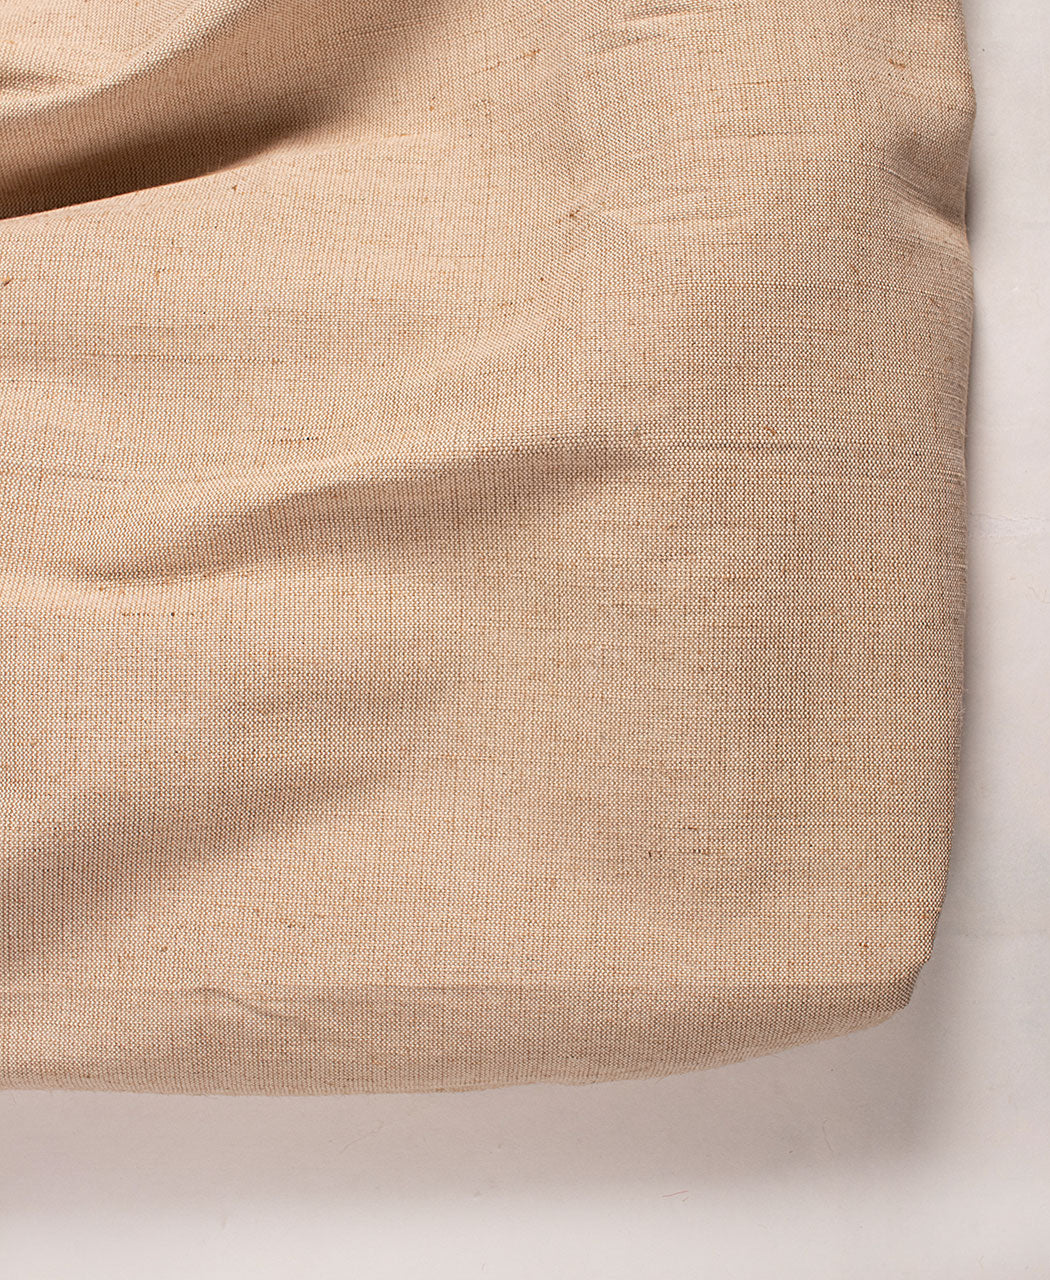 Beige Plain Cotton Jute Fabric For Home Furnishing ( Width 52 Inch )